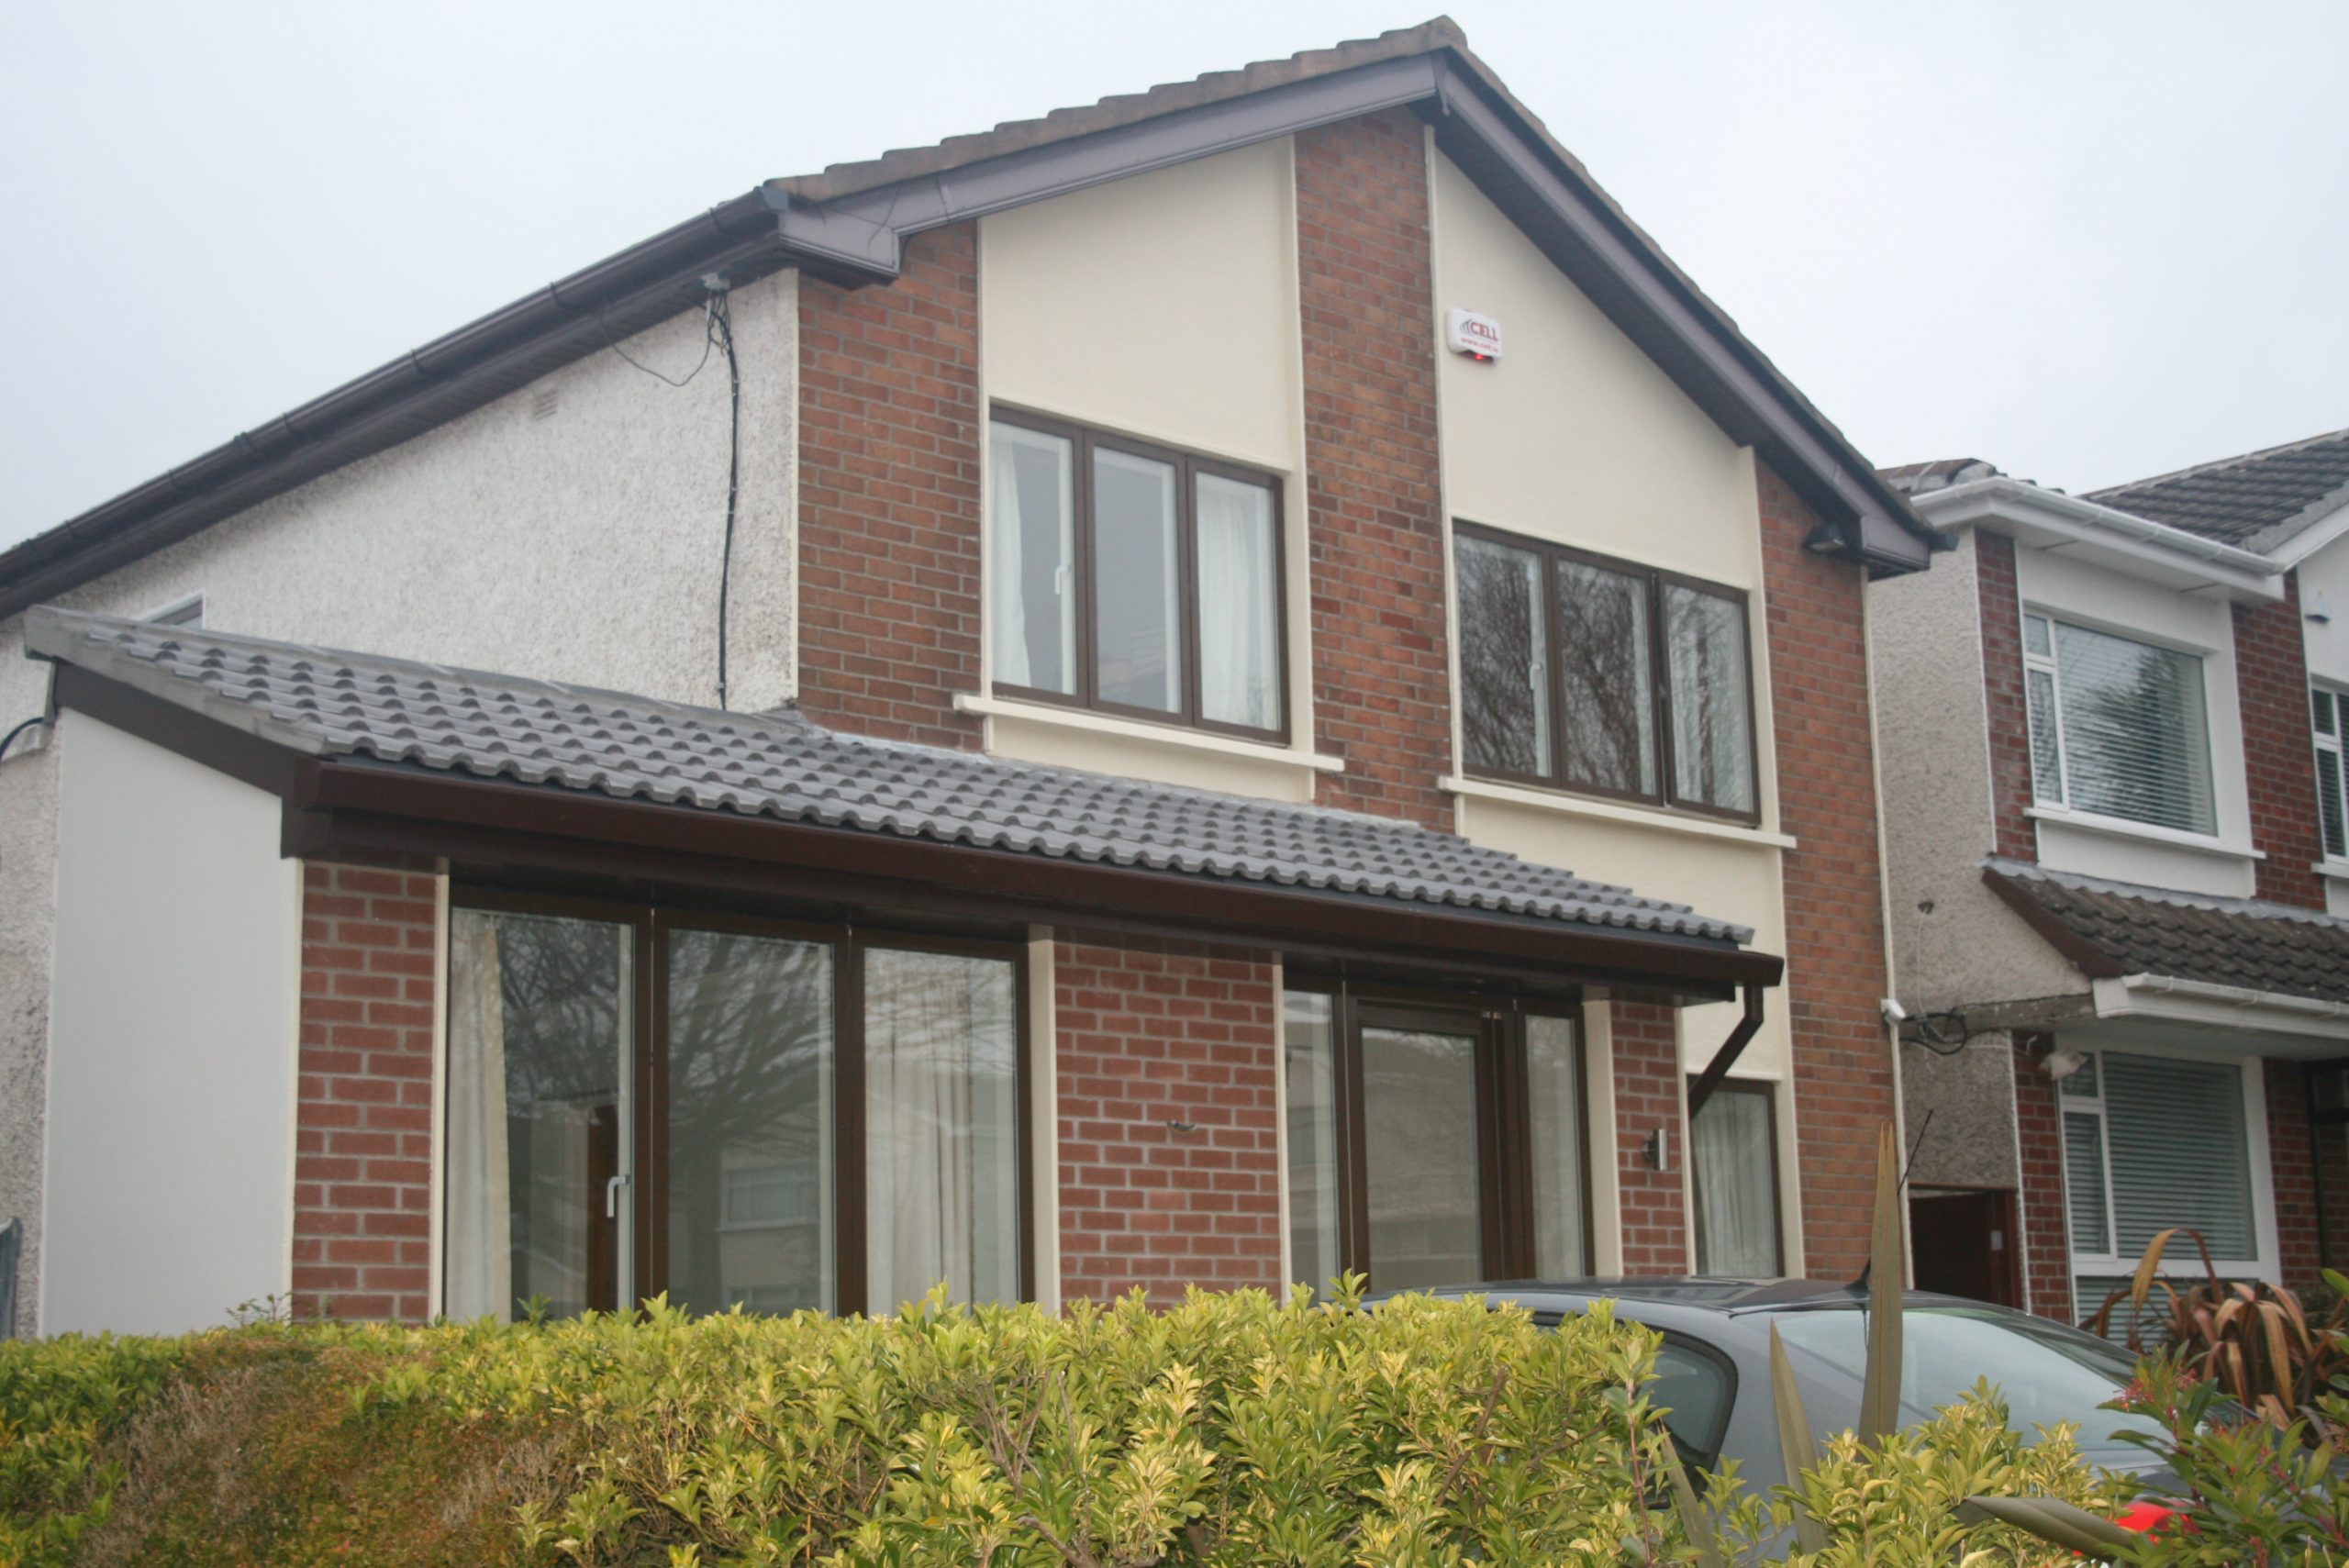 energy efficient architect designed Home Dublin Portmarnock